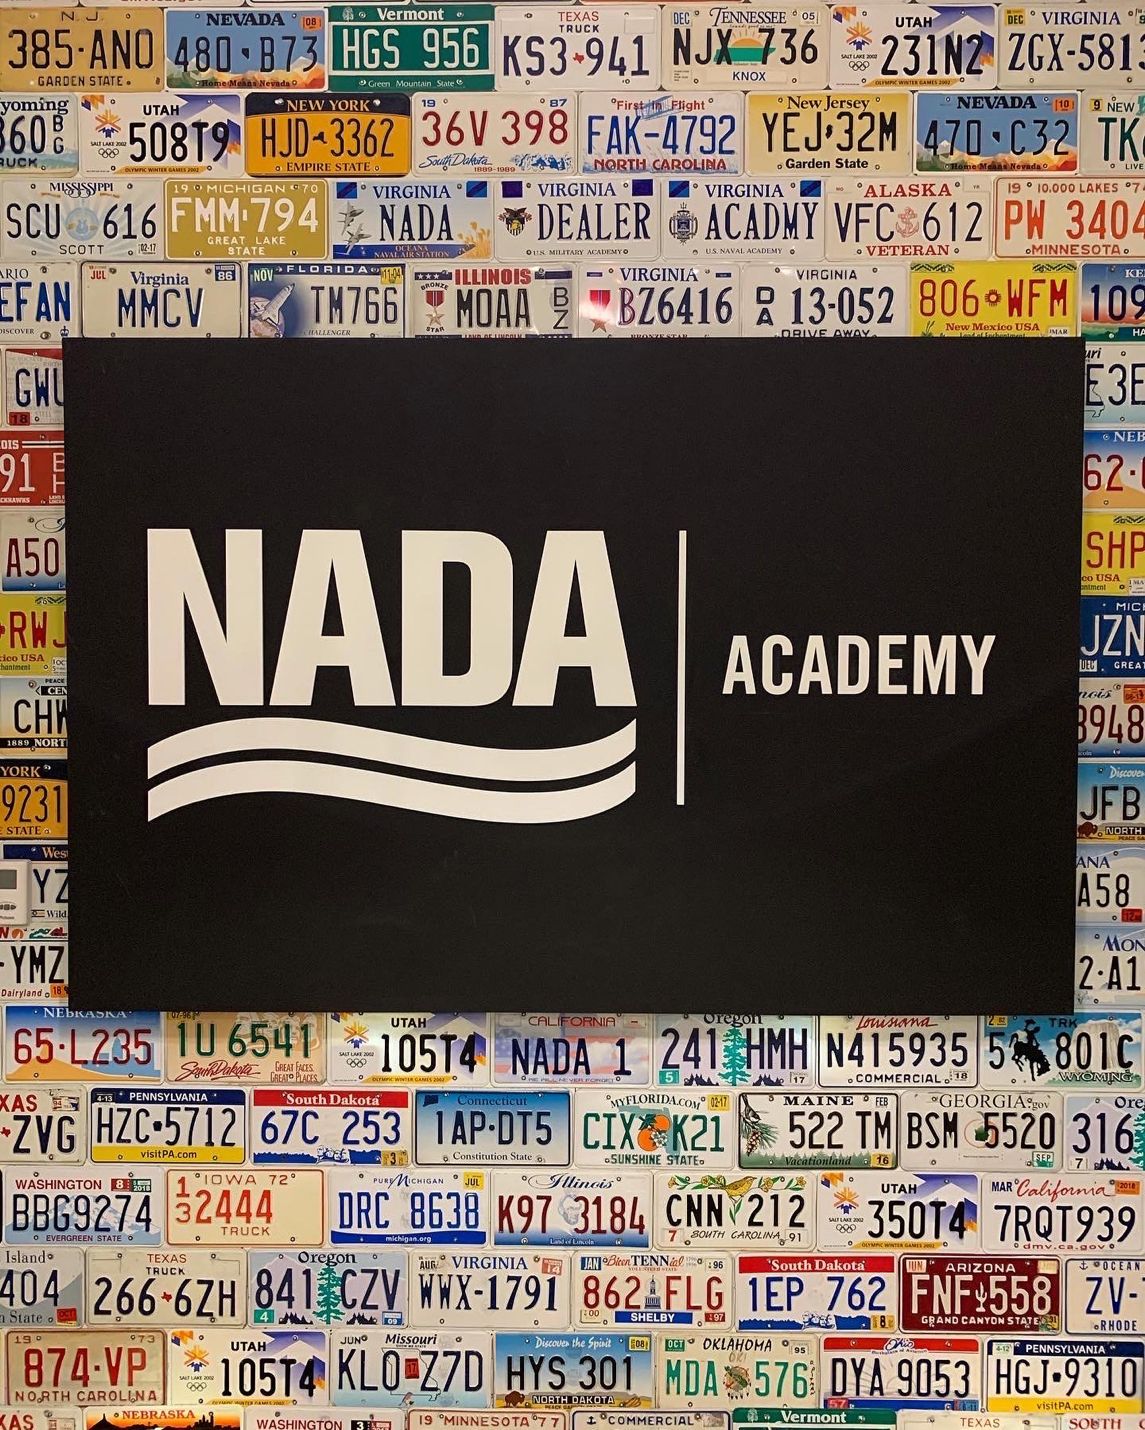 Richmond Honda’s Daniel Bailey is now a NADA Academy graduate